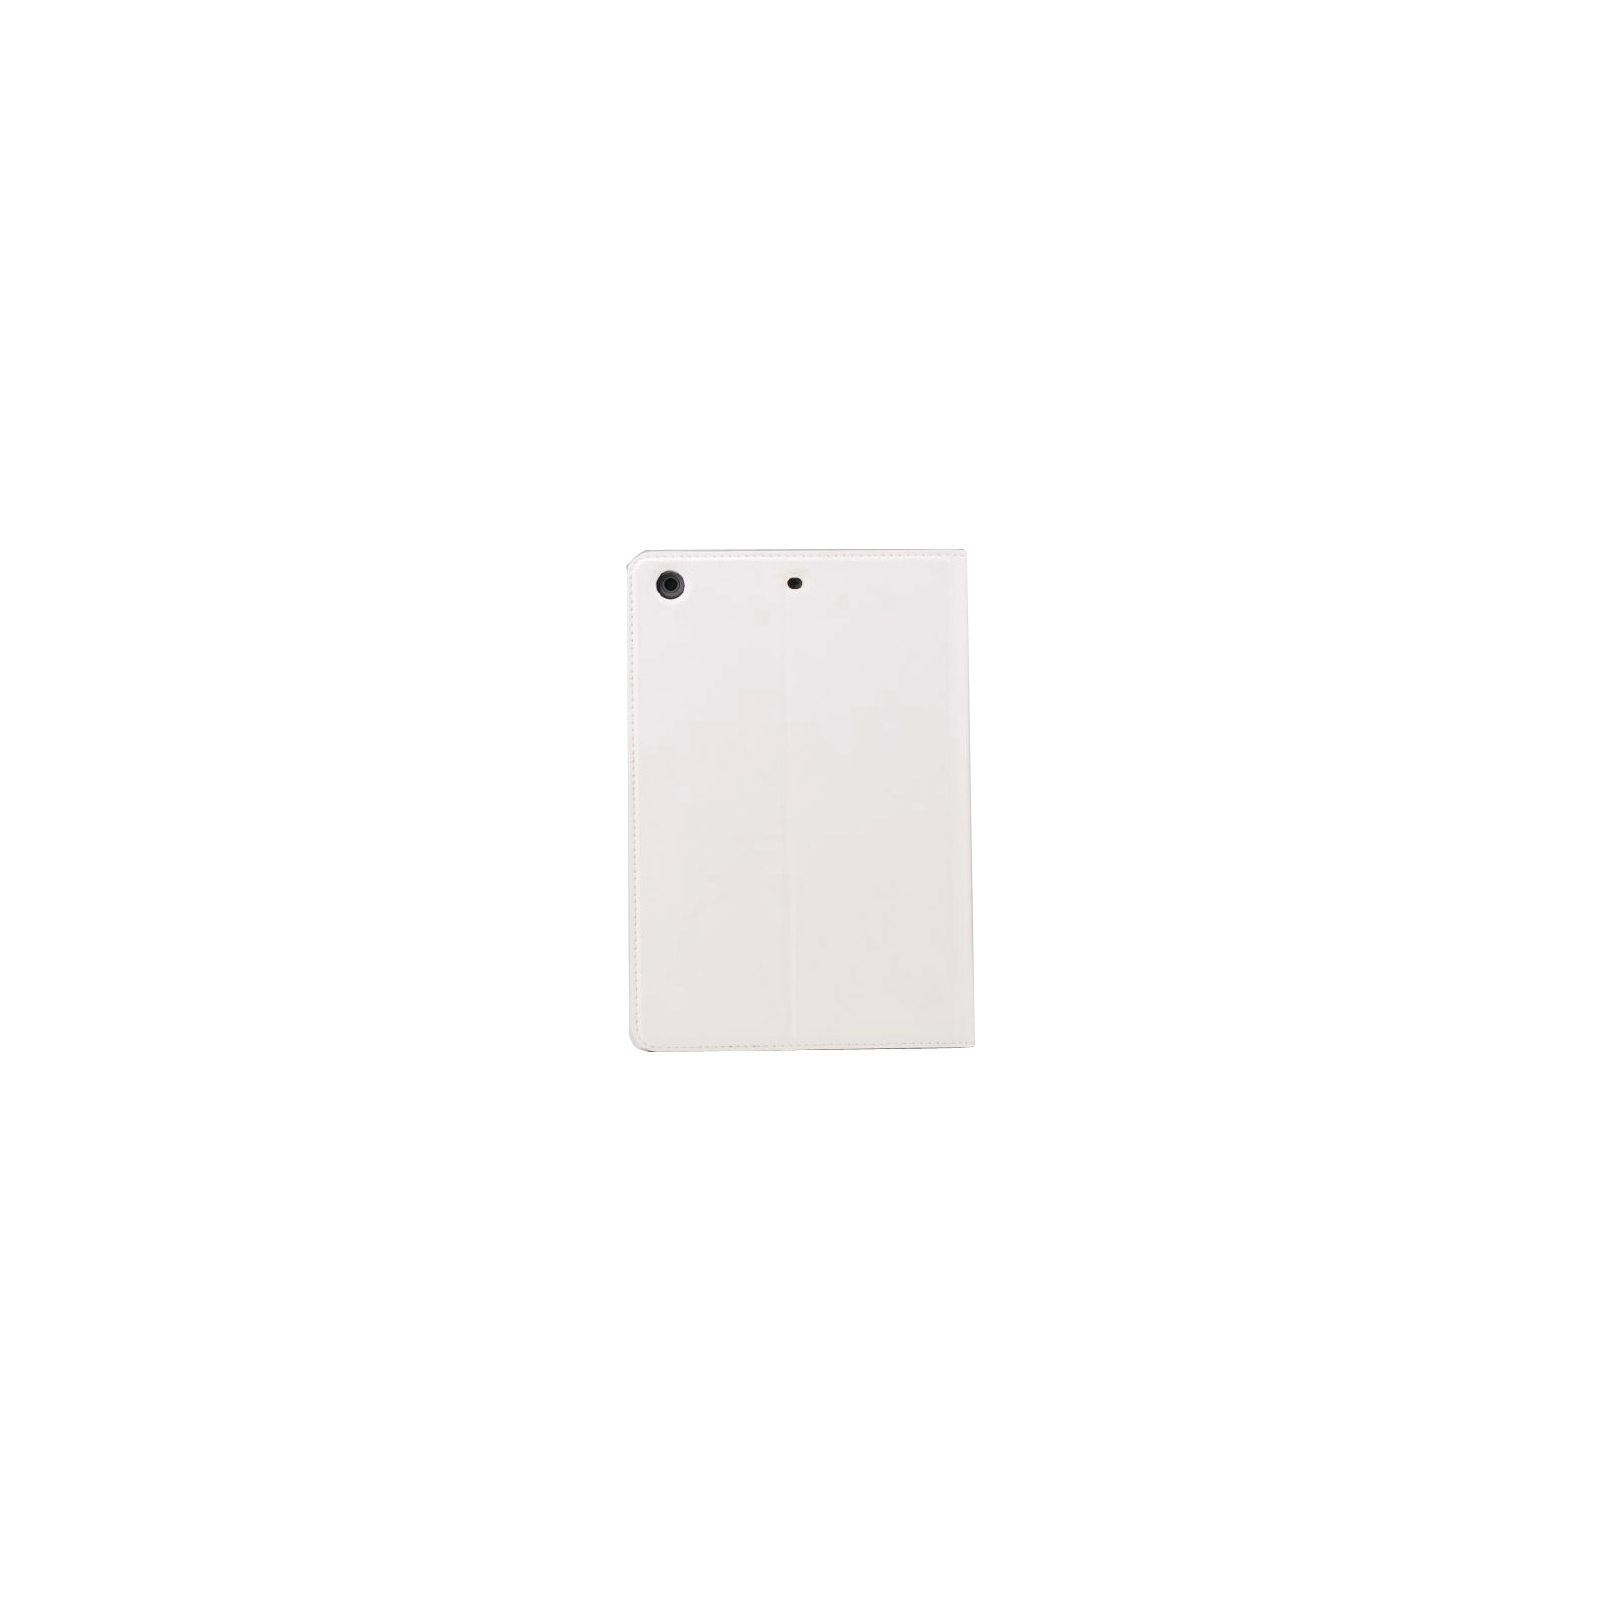 Чехол для планшета Rock iPad mini Retina Rotate series white (Retina-59911) изображение 2